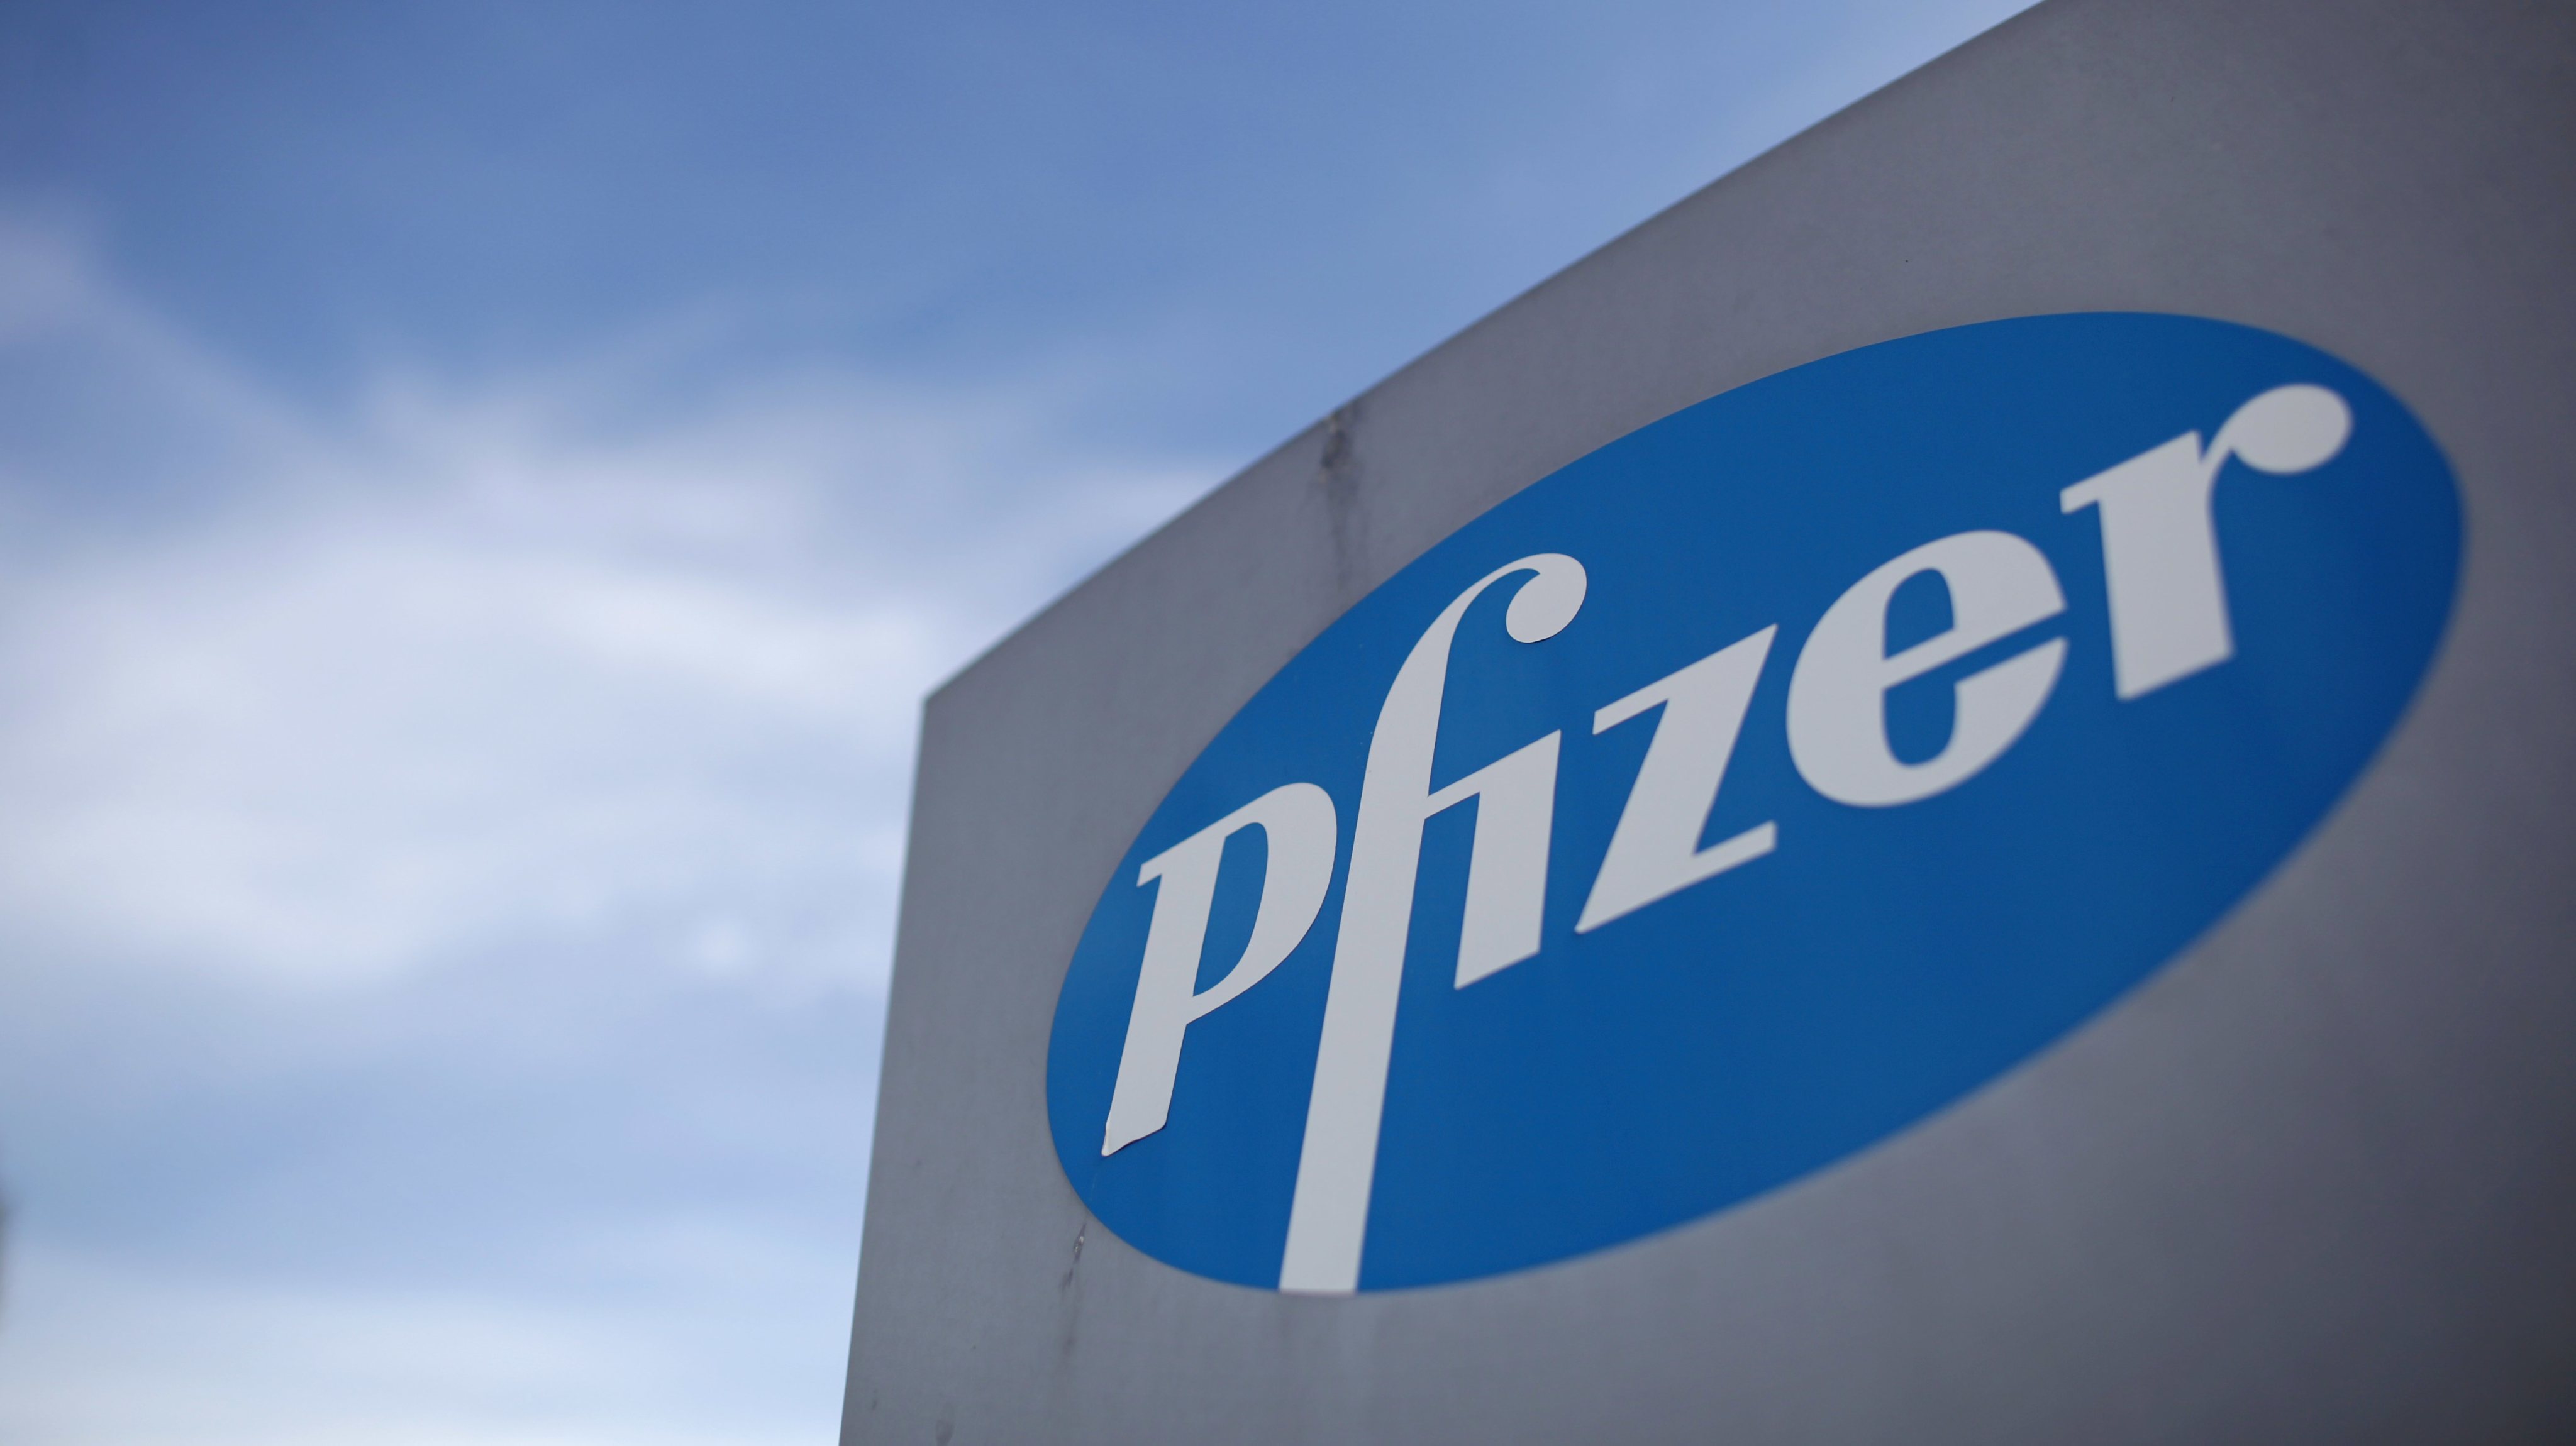 Chancellor George Osborne Visits Pharmaceutical Company Pfizer